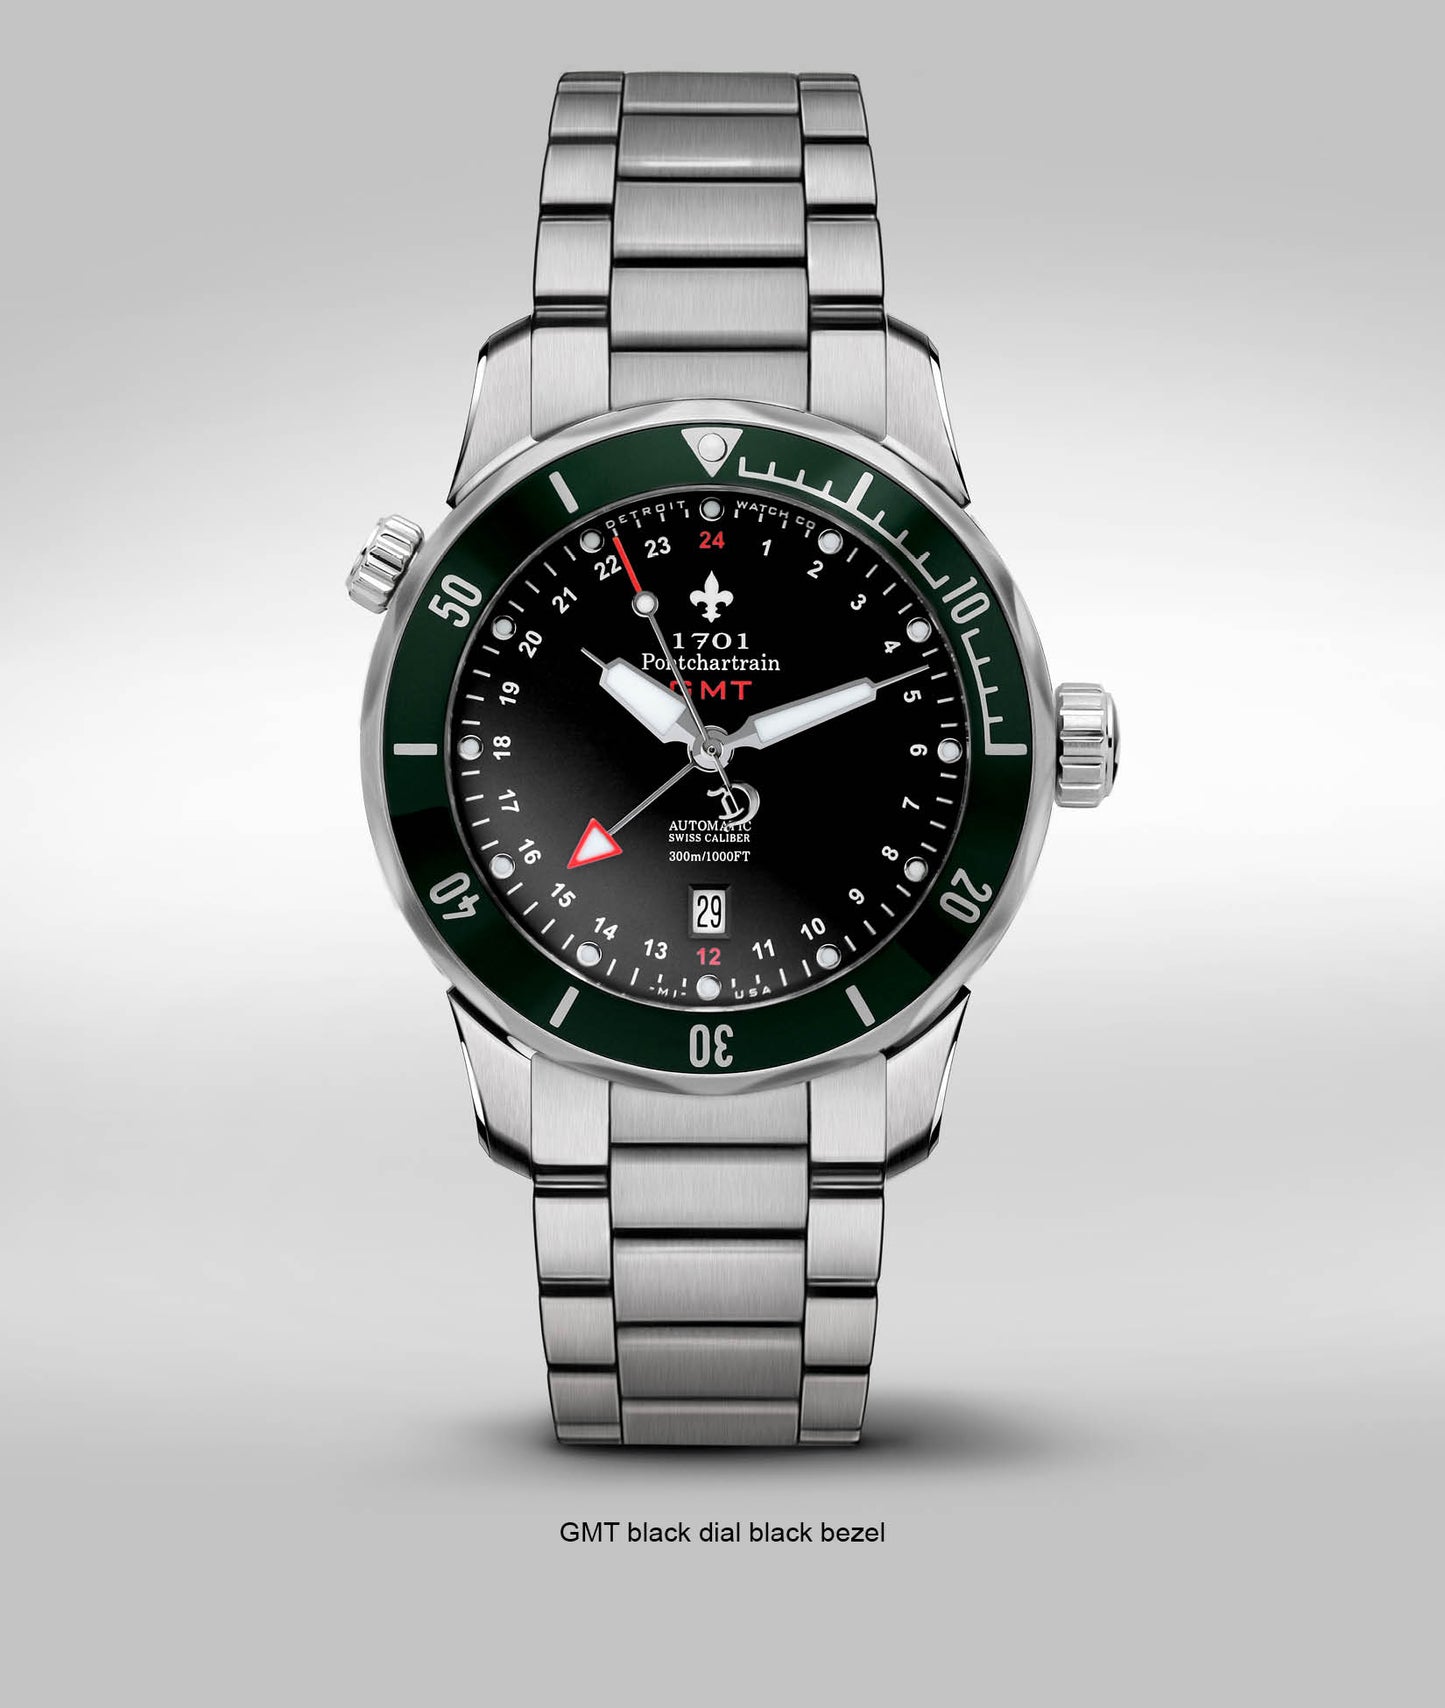 43mm 1701 Pontchartrain® Great Lakes Edition GMT Diver